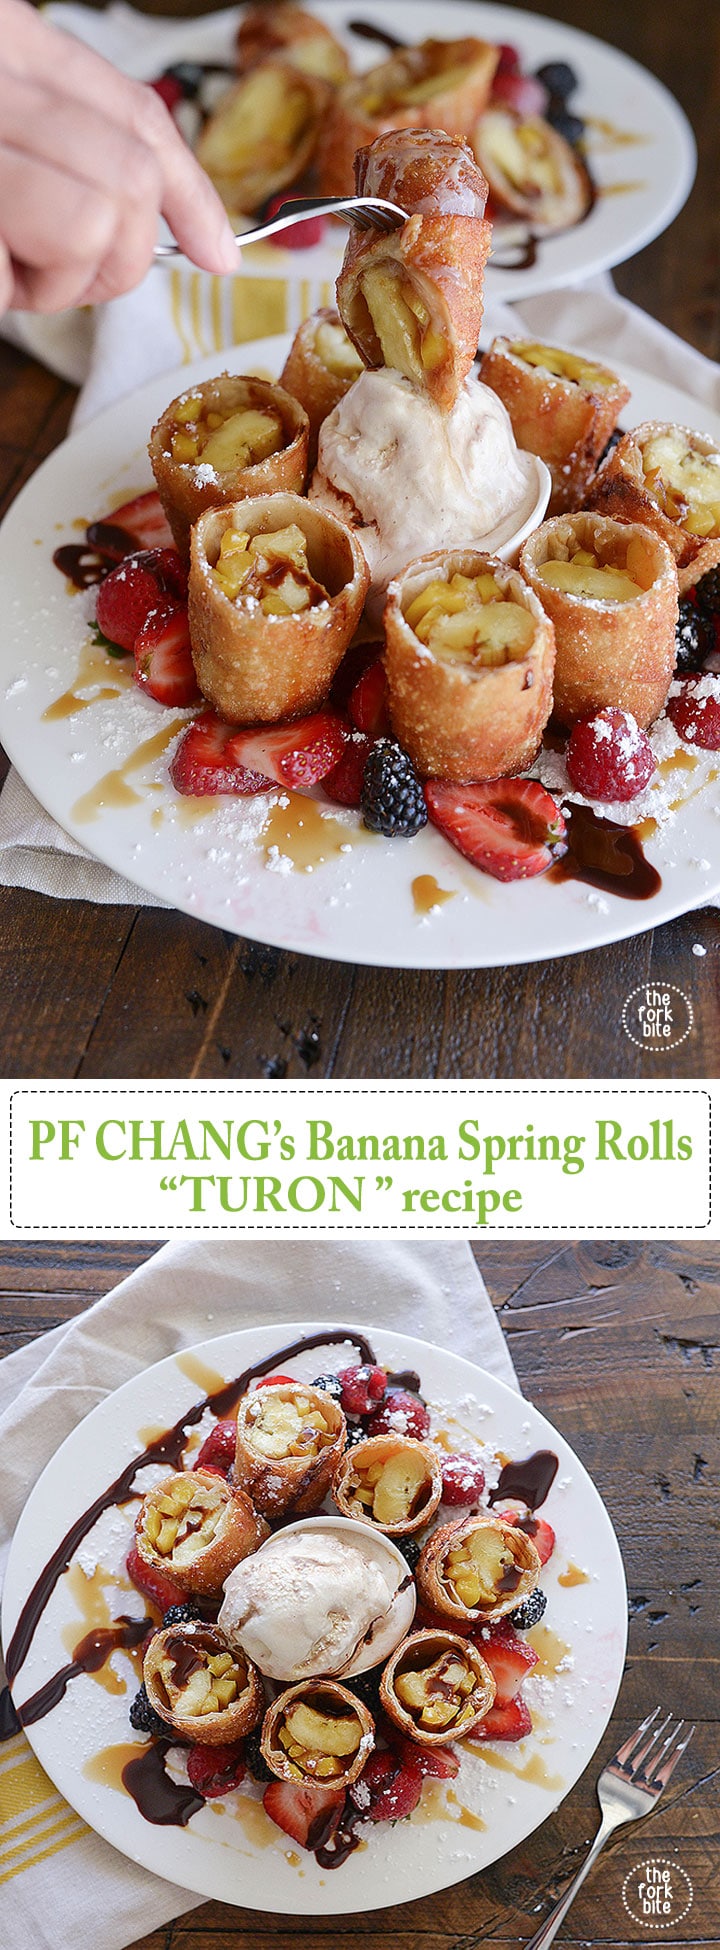 PF Changs Banana Spring Rolls Turon Recipe